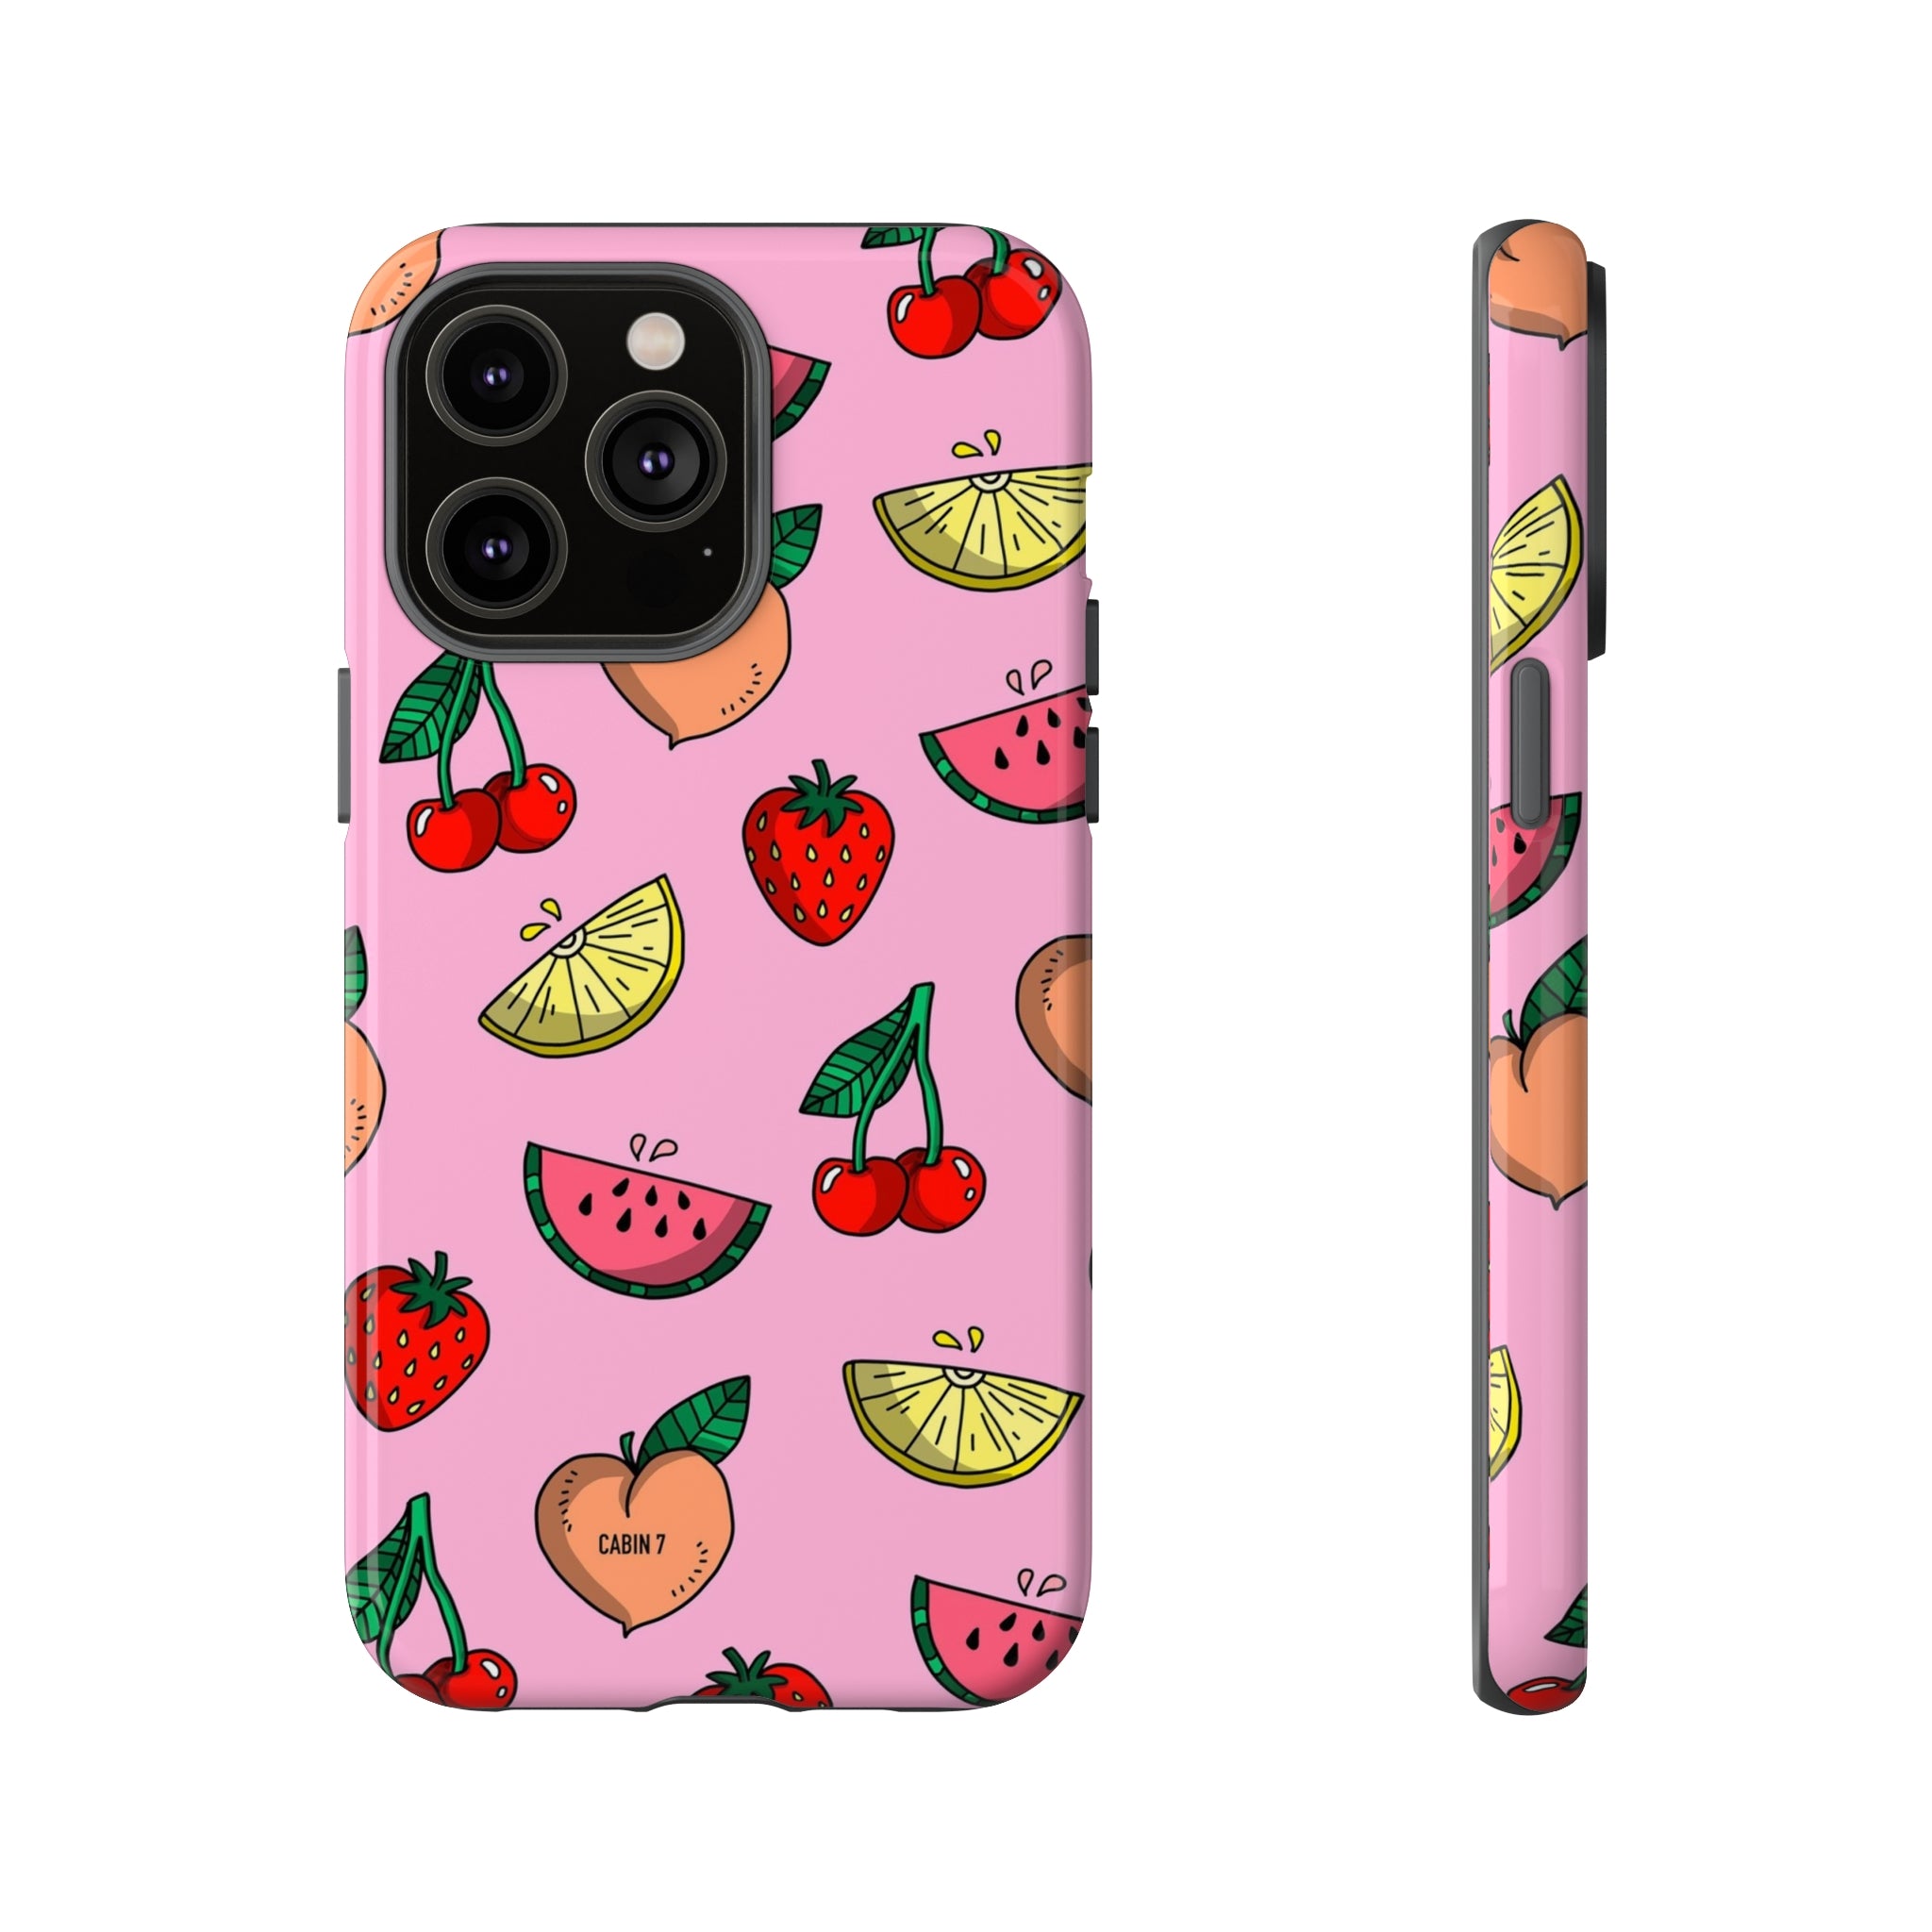 Fruit Punch Phone Case